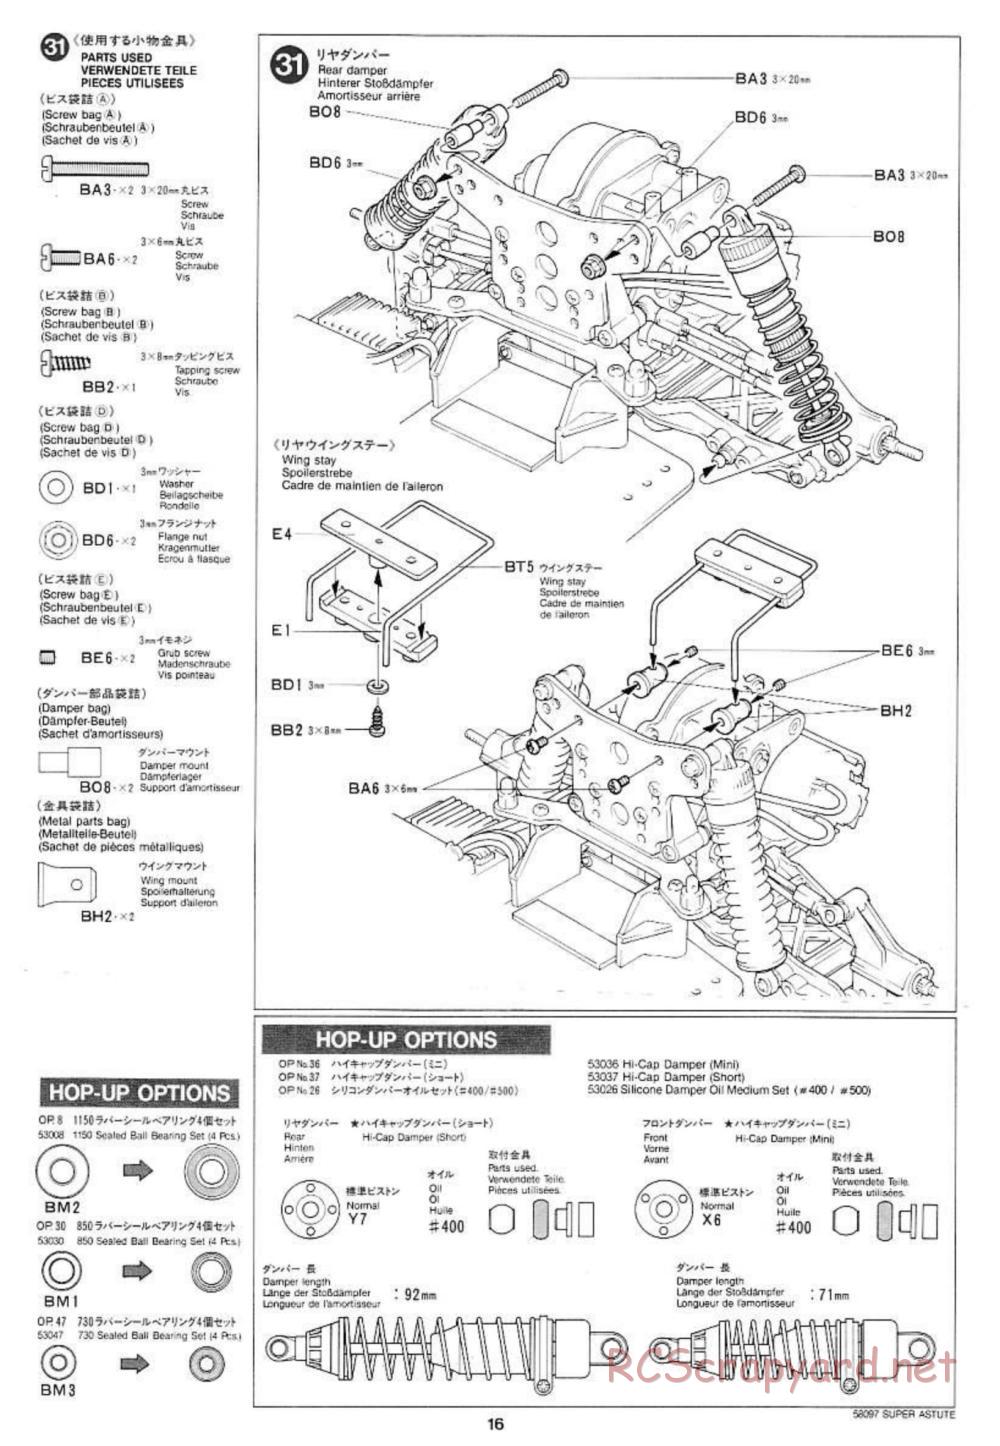 Tamiya - Super Astute - 58097 - Manual - Page 16